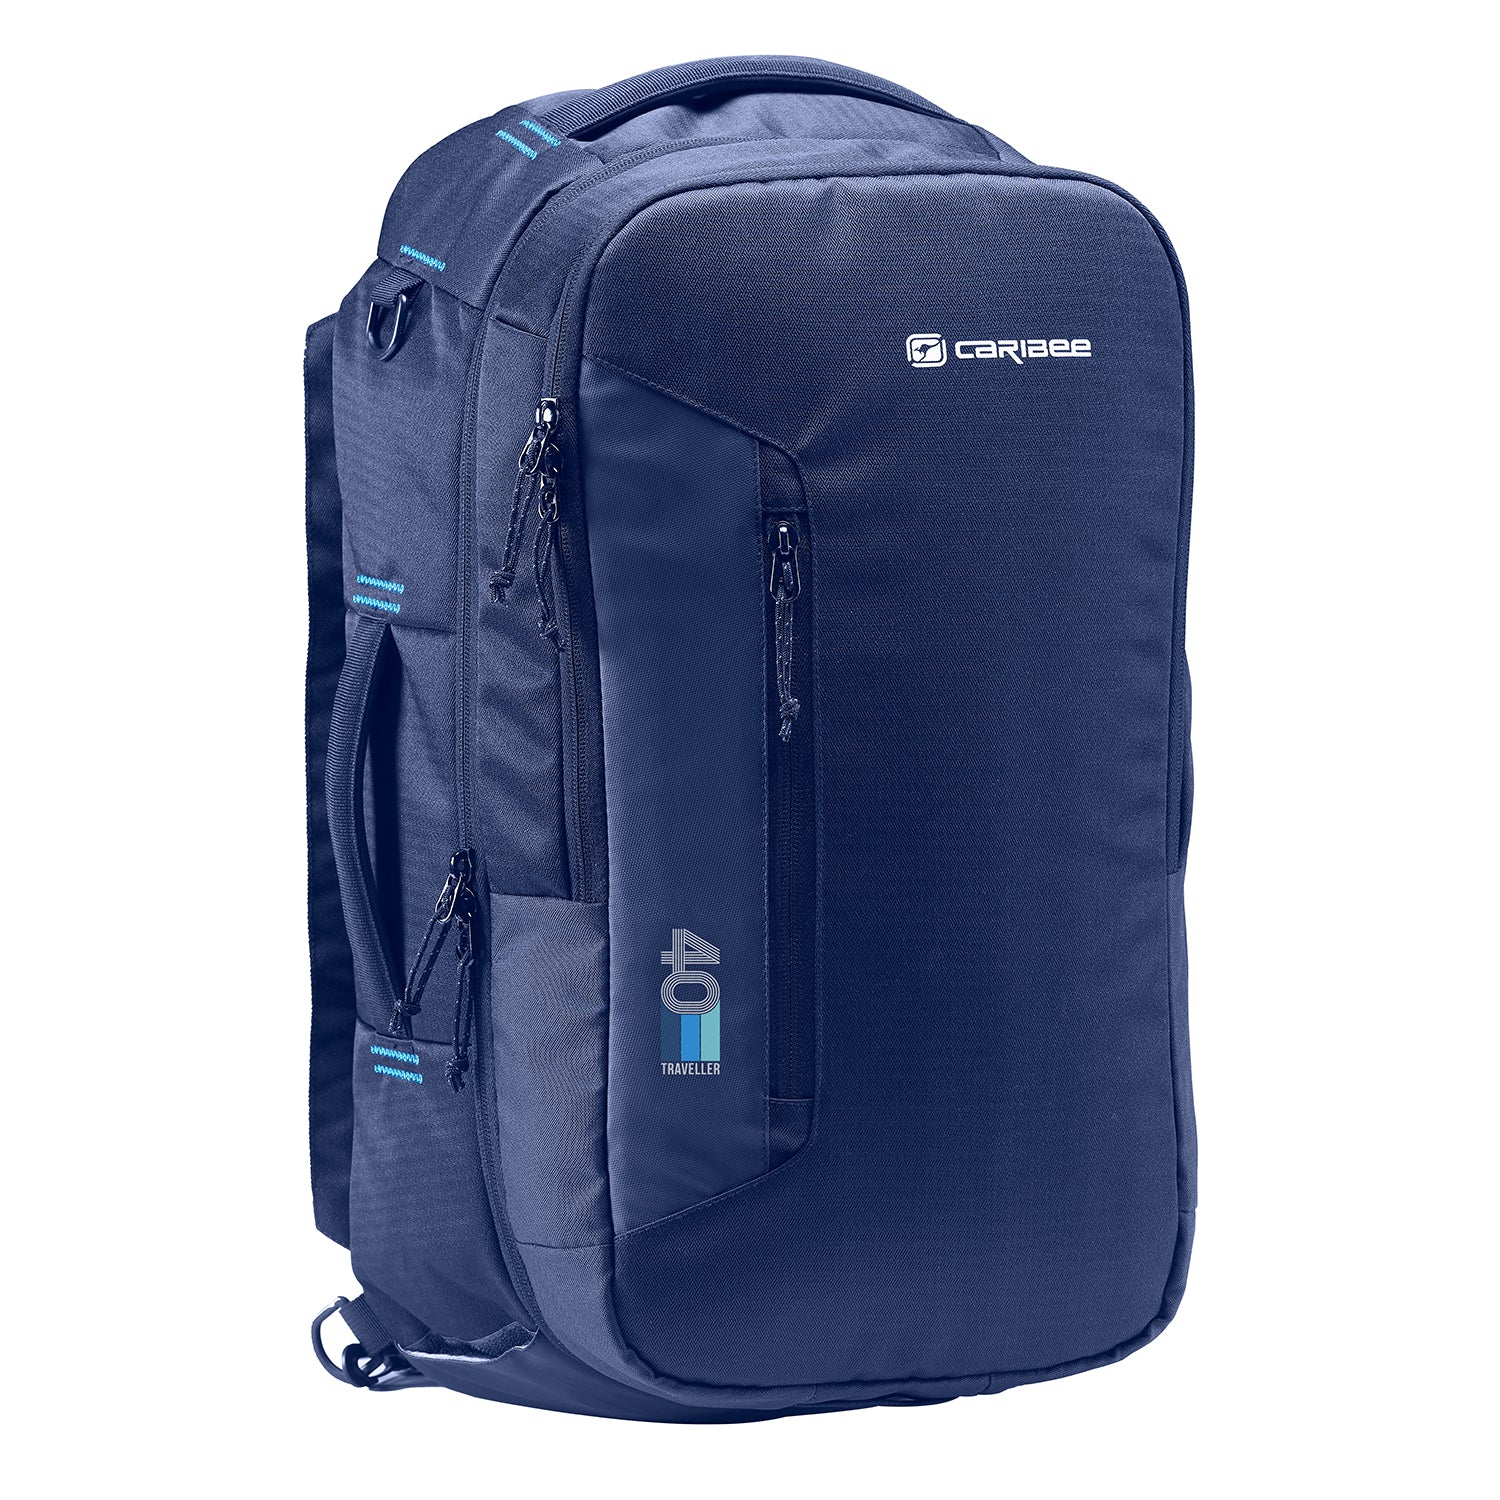 Caribee- 69061 Traveller 40lt Duffle-Backpack travel bag - Navy